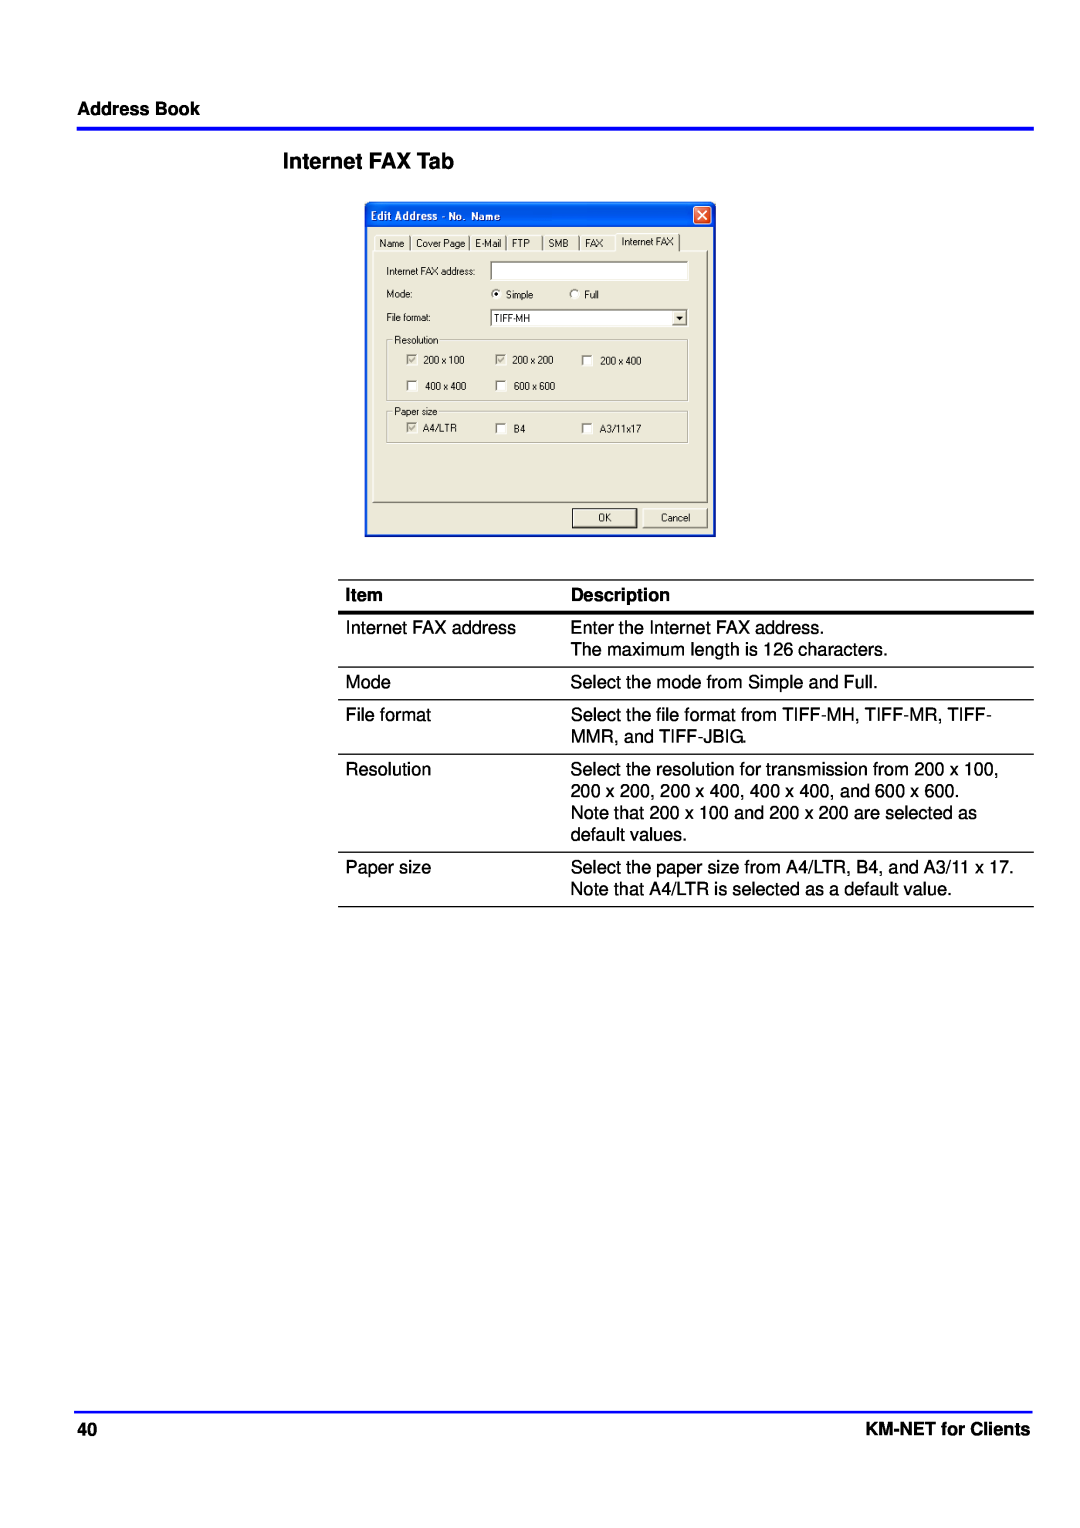 Kyocera manual Internet FAX Tab, Address Book, Item, Description, KM-NETfor Clients 